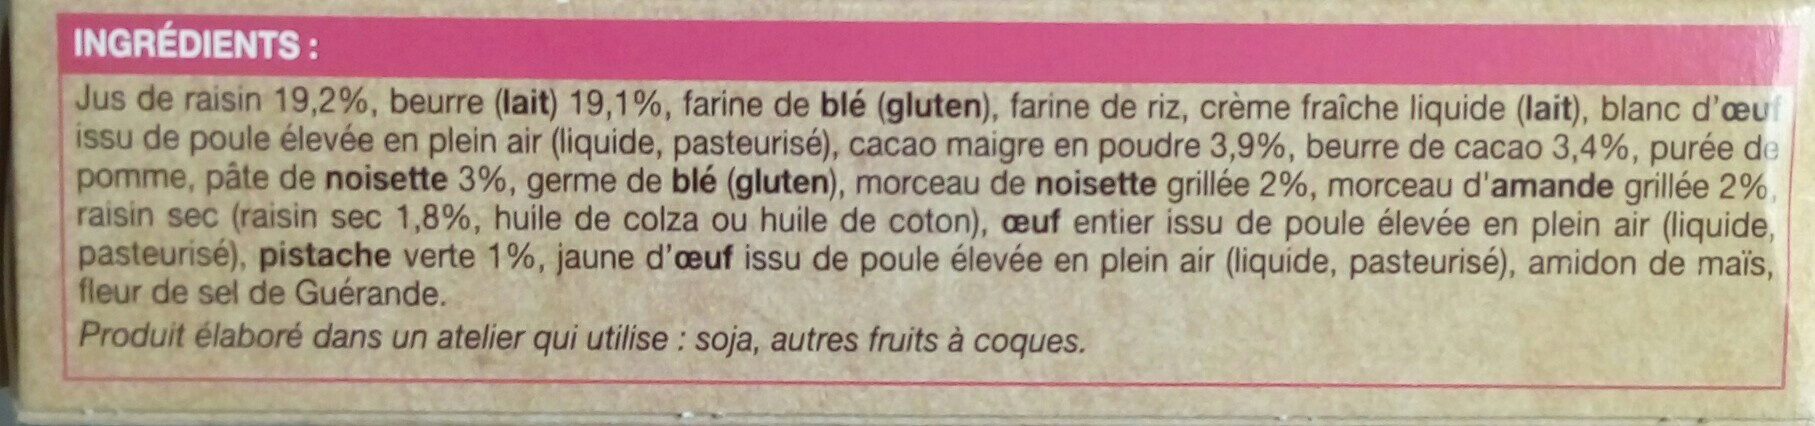 Tartelette cacao facon mendiant - Ingredients - fr